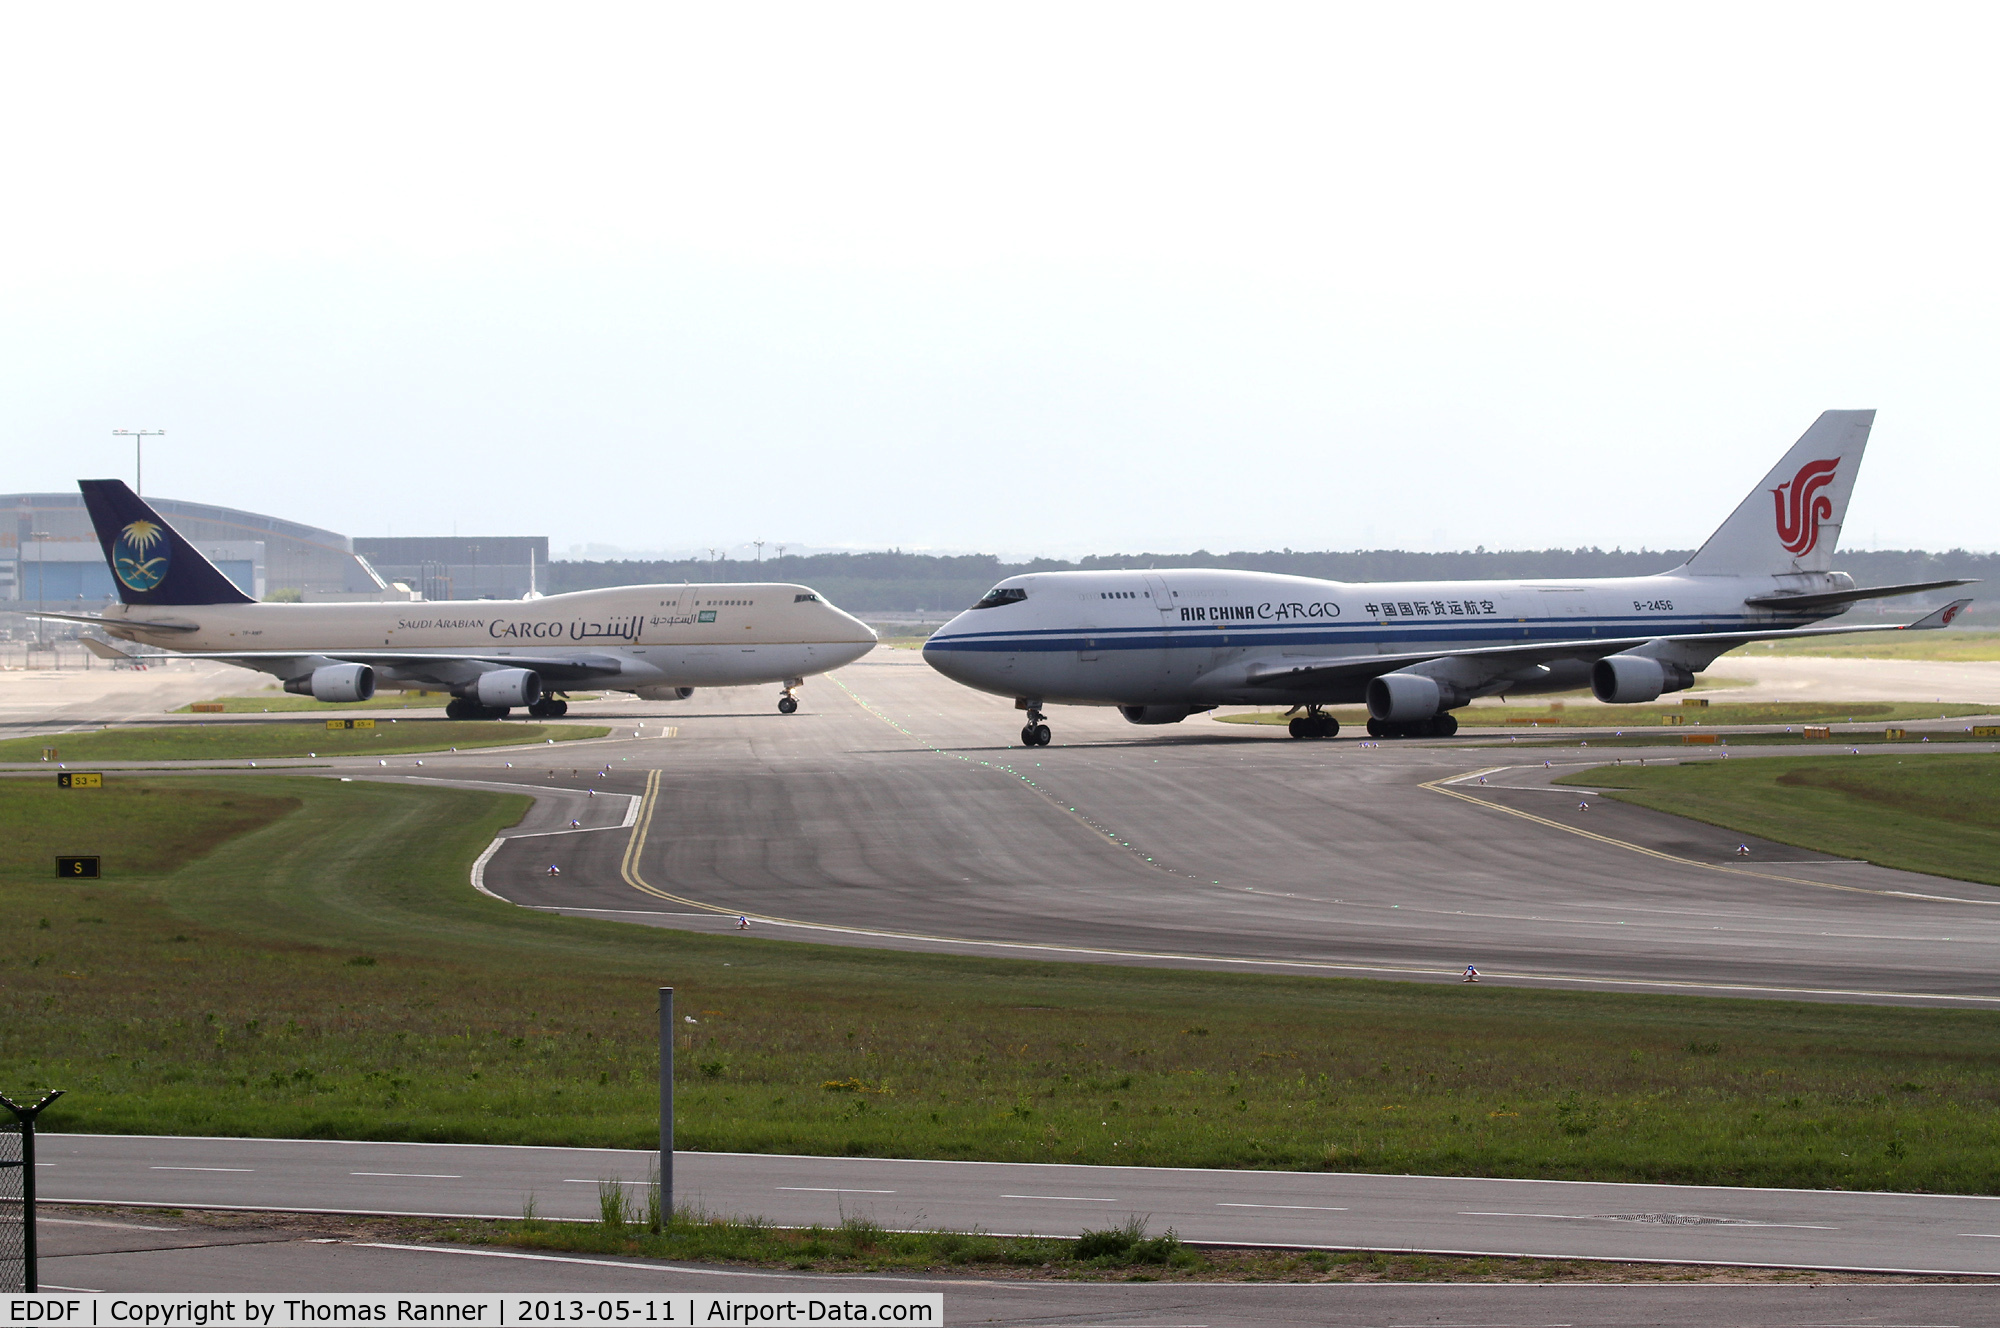 Frankfurt International Airport, Frankfurt am Main Germany (EDDF) - Two Boeing 747BCFs